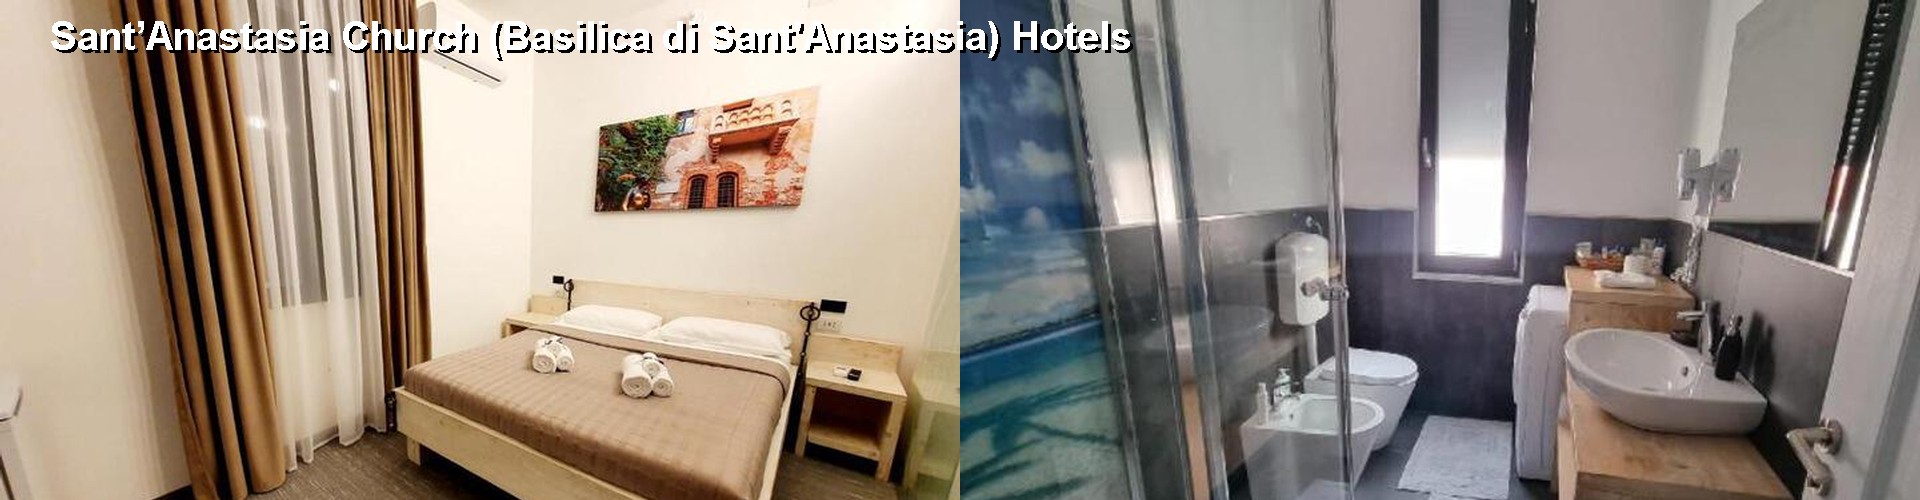 5 Best Hotels near Sant’Anastasia Church (Basilica di Sant'Anastasia)